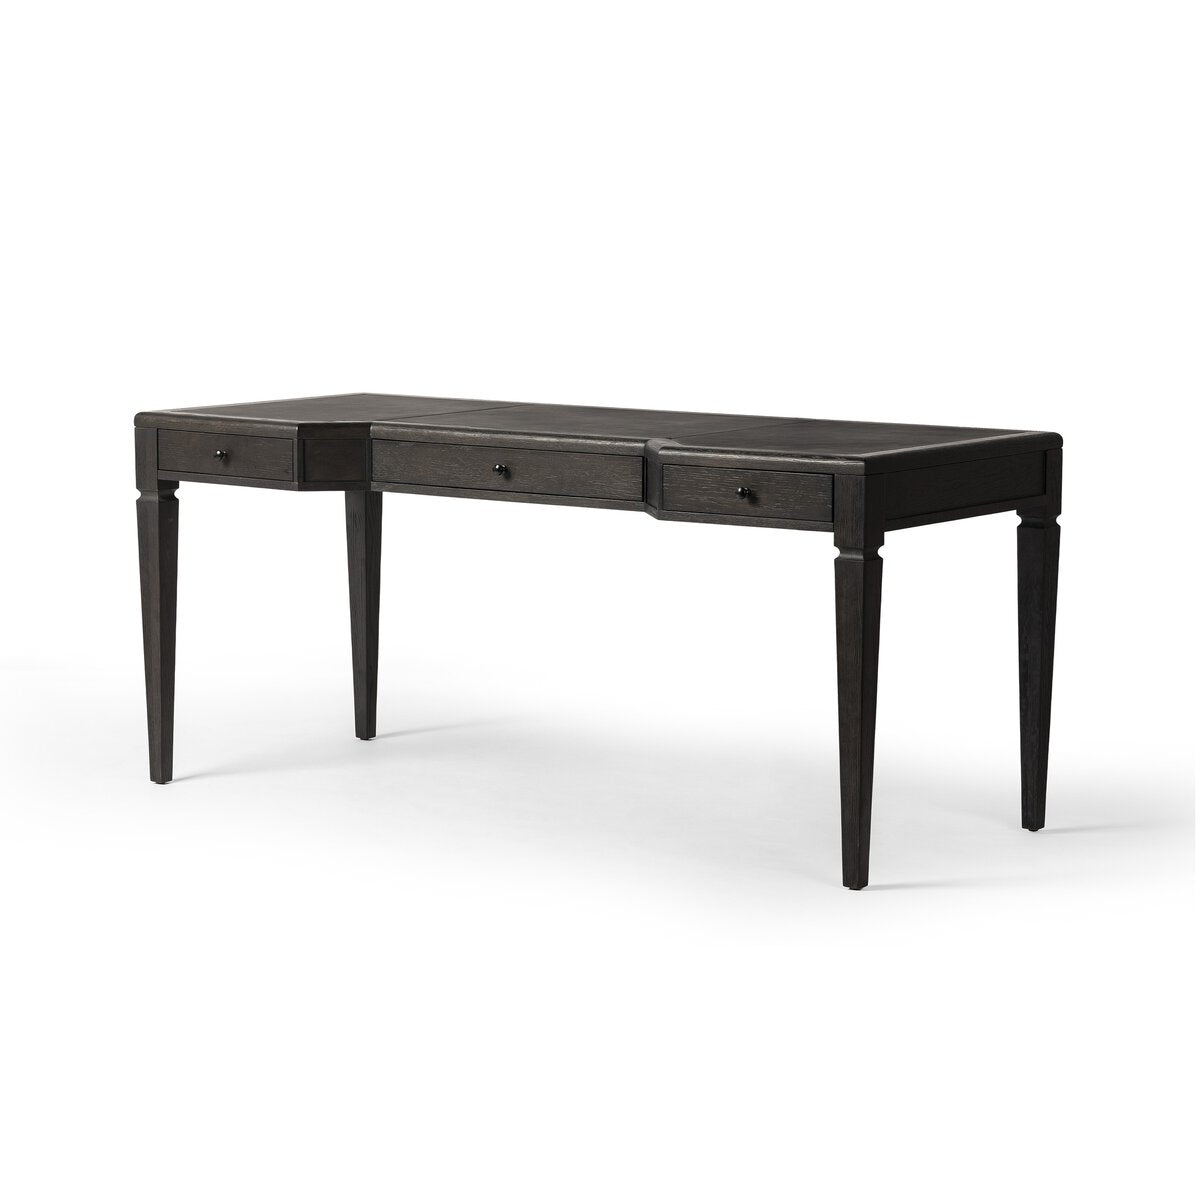 Etowah Desk - StyleMeGHD - Desks